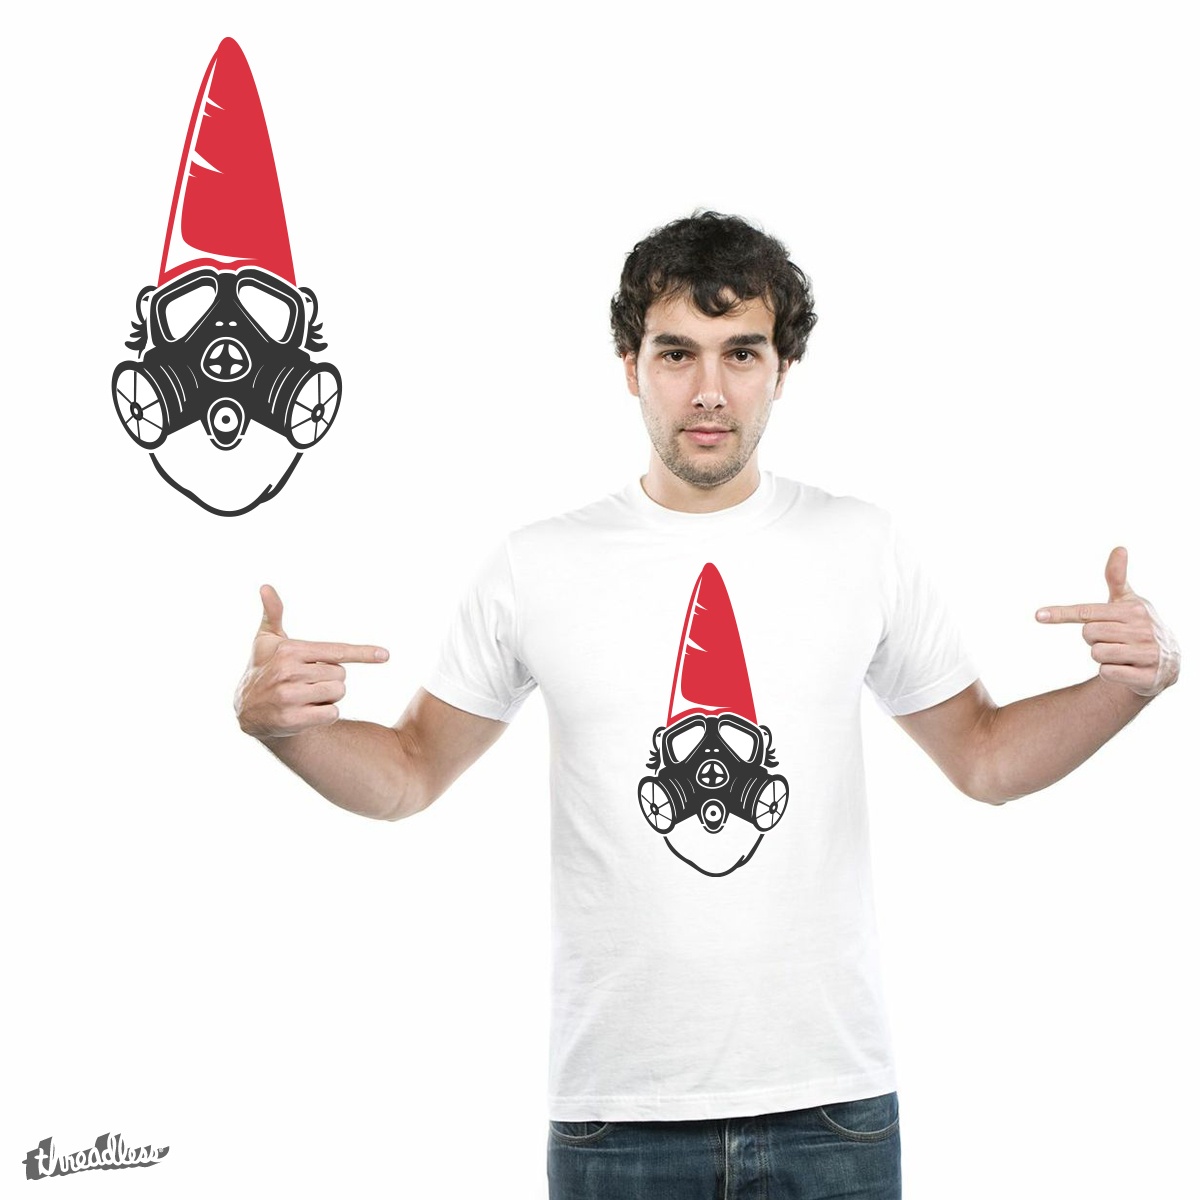 Gnome Quarantine, a cool t-shirt design